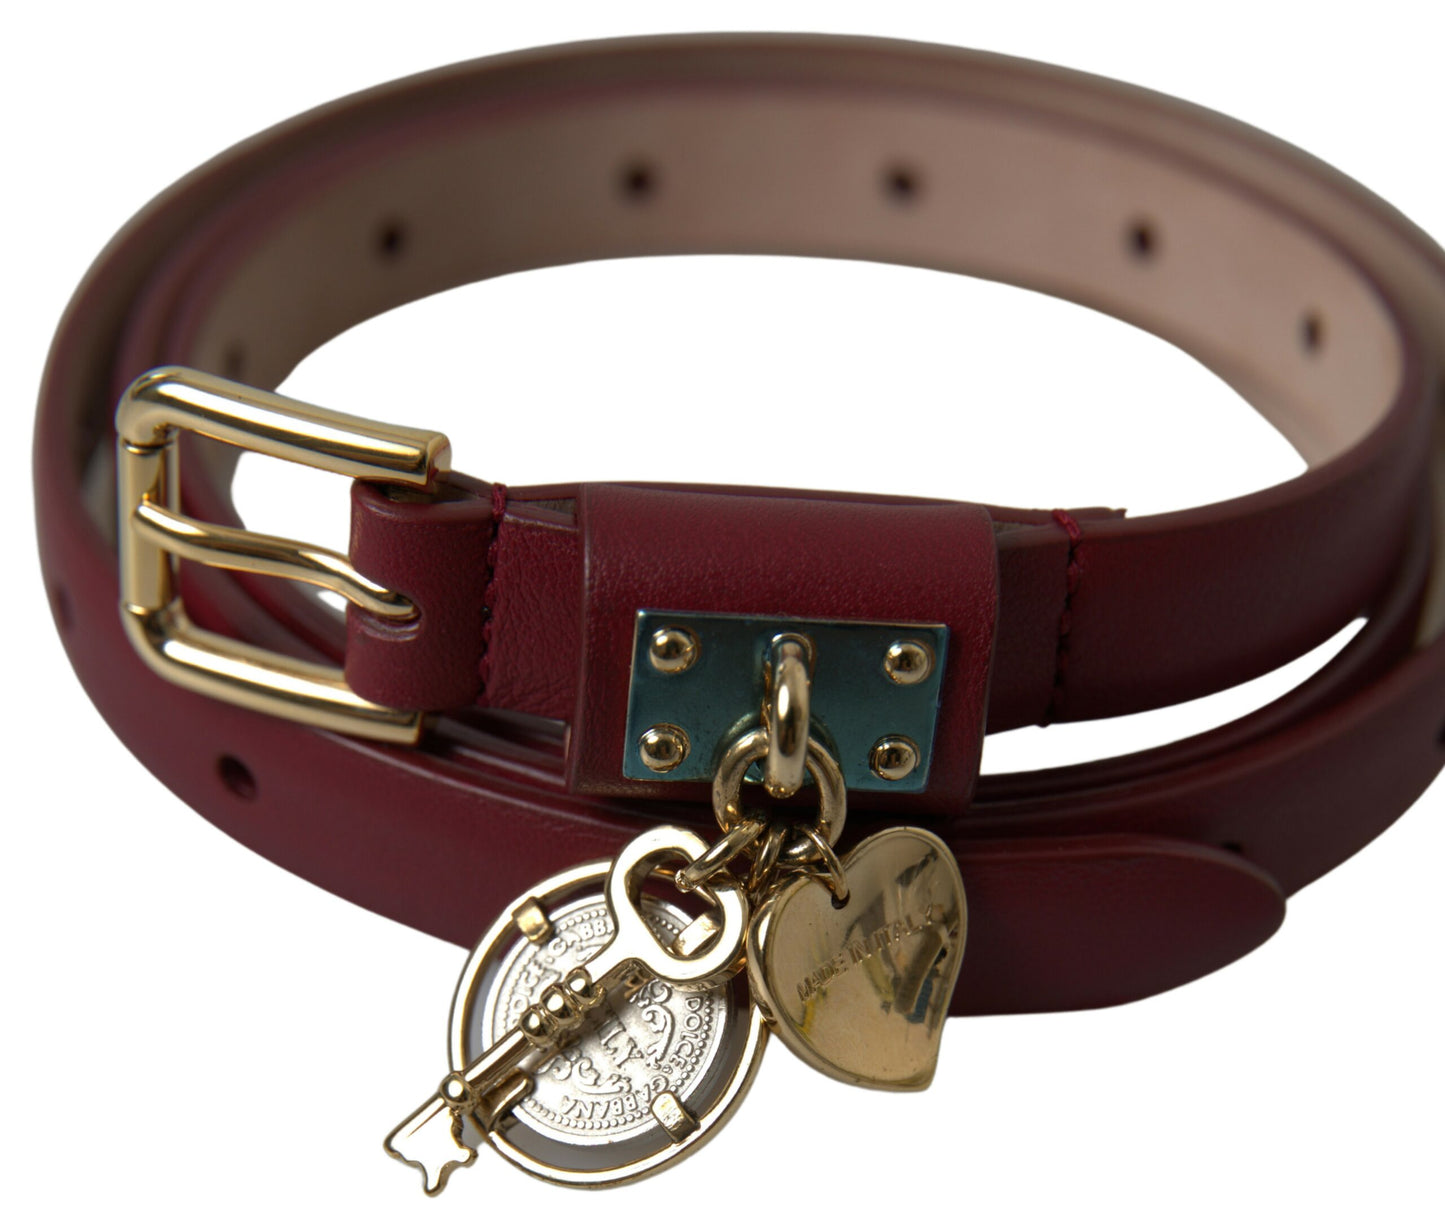 Elegant Bordeaux Leather Belt with Metallic Buckle